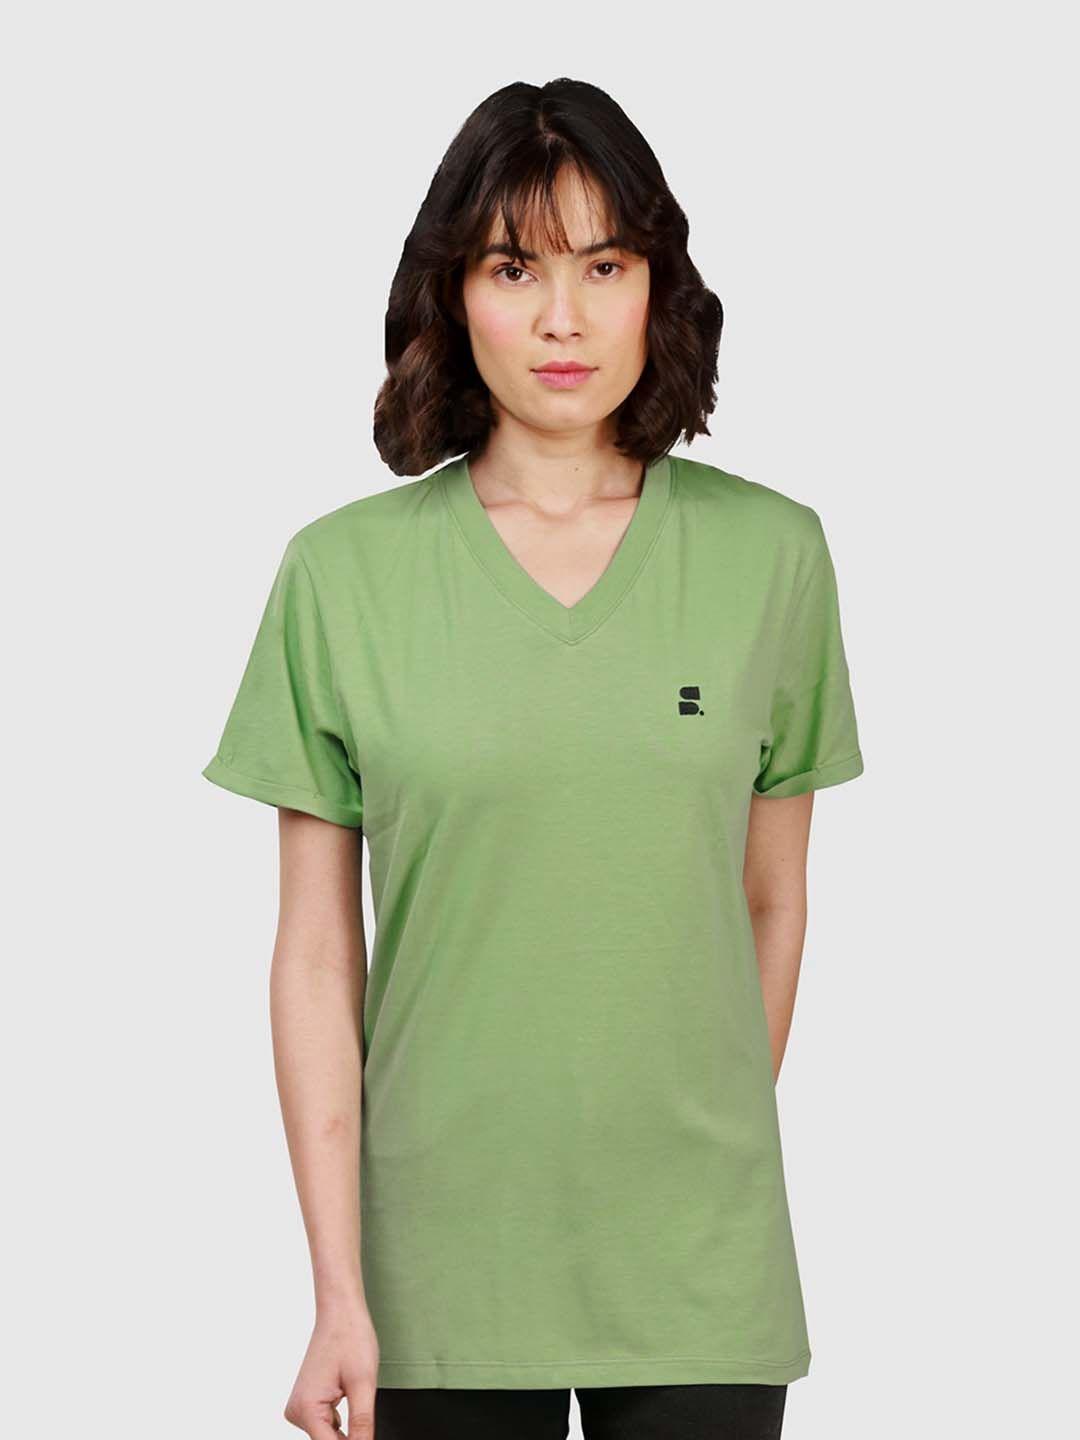 sumiso v-neck pure cotton longline t-shirt